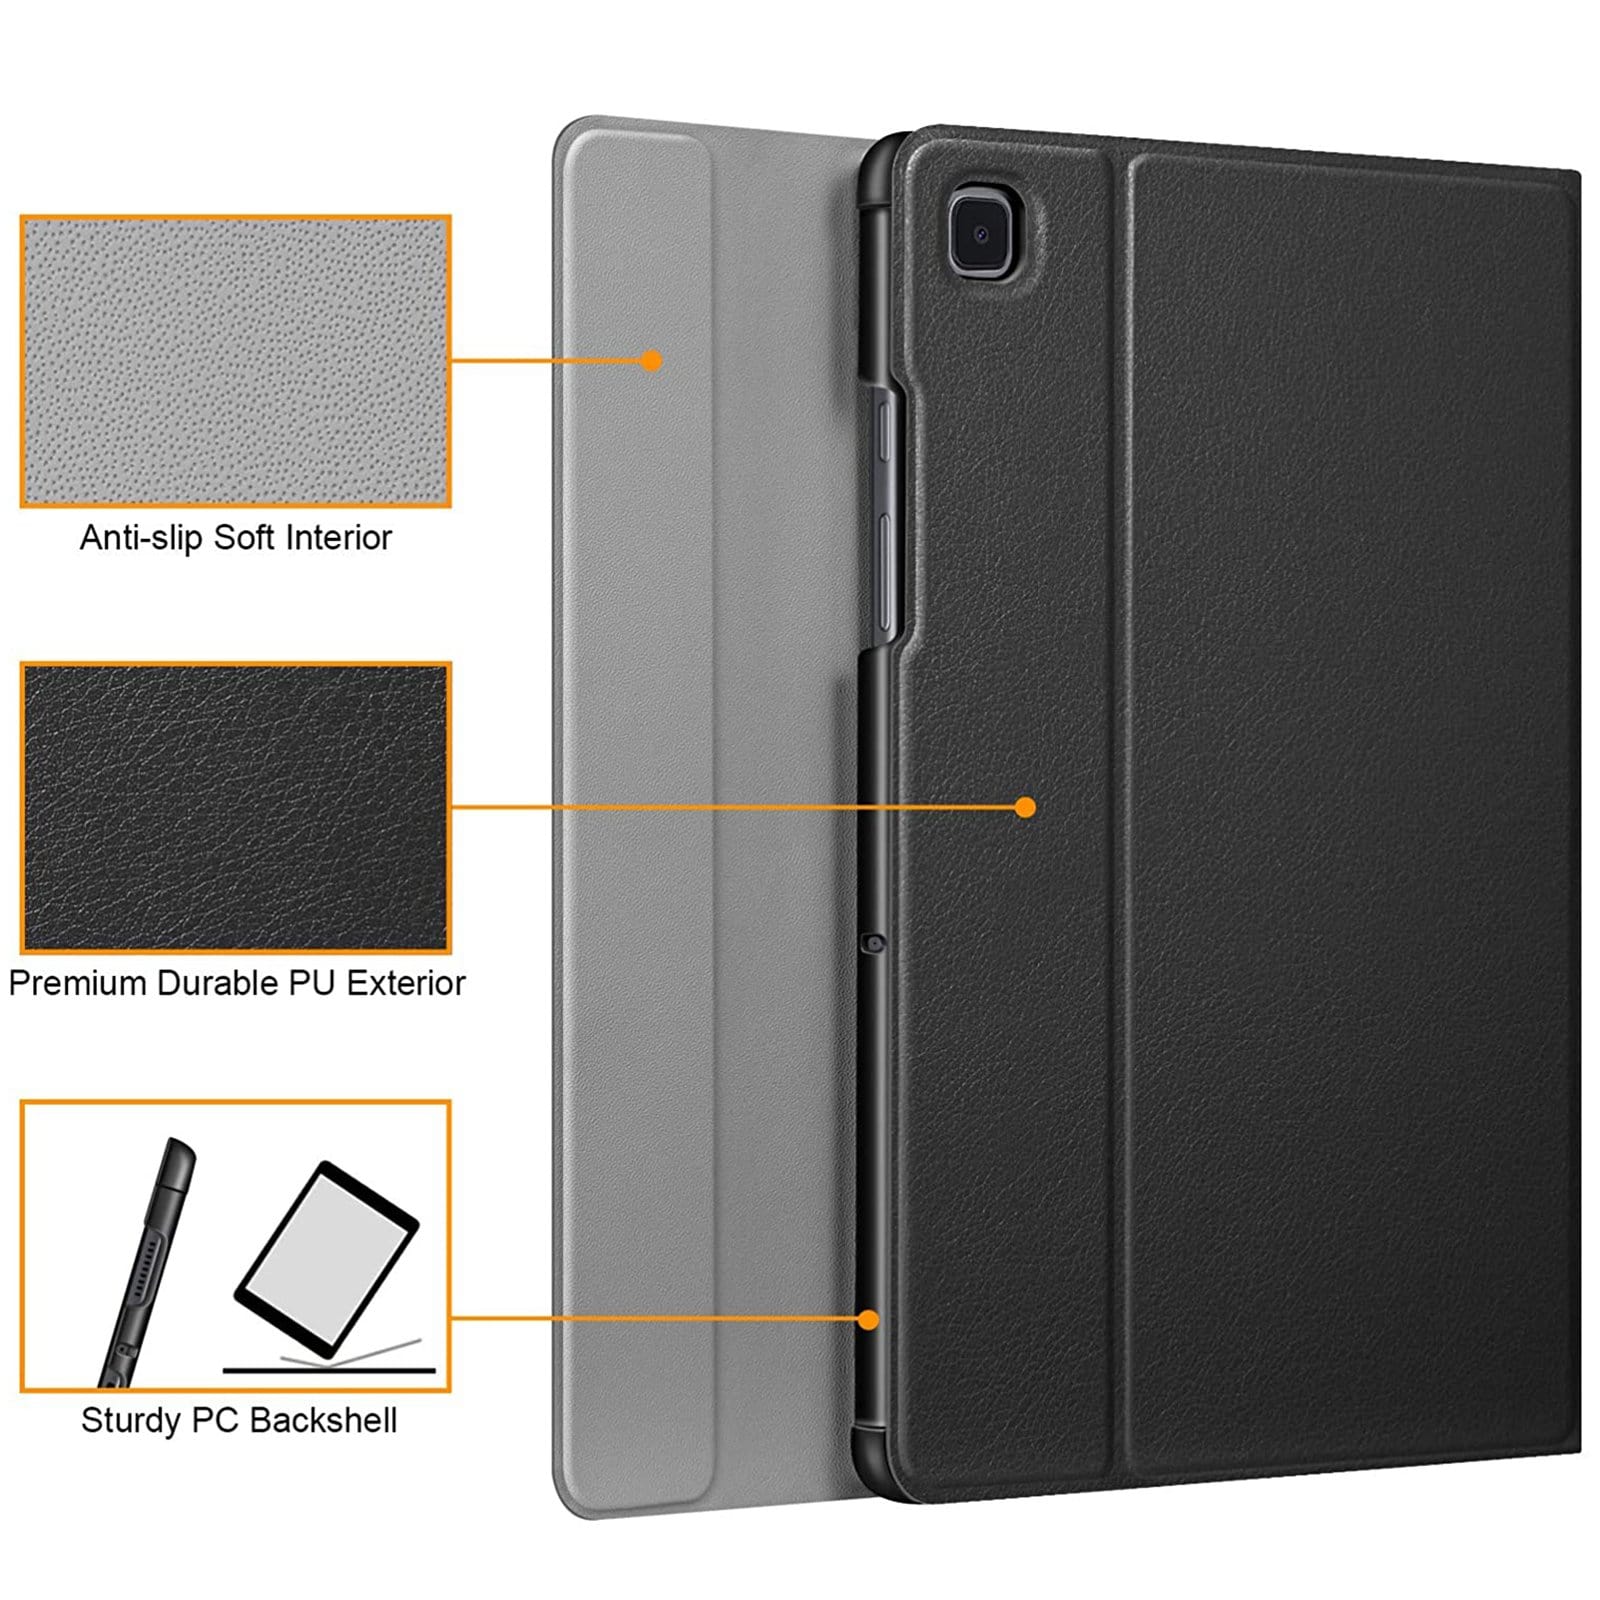 SaharaCase -Keyboard Case for Samsung Galaxy Tab A7 Lite - Black